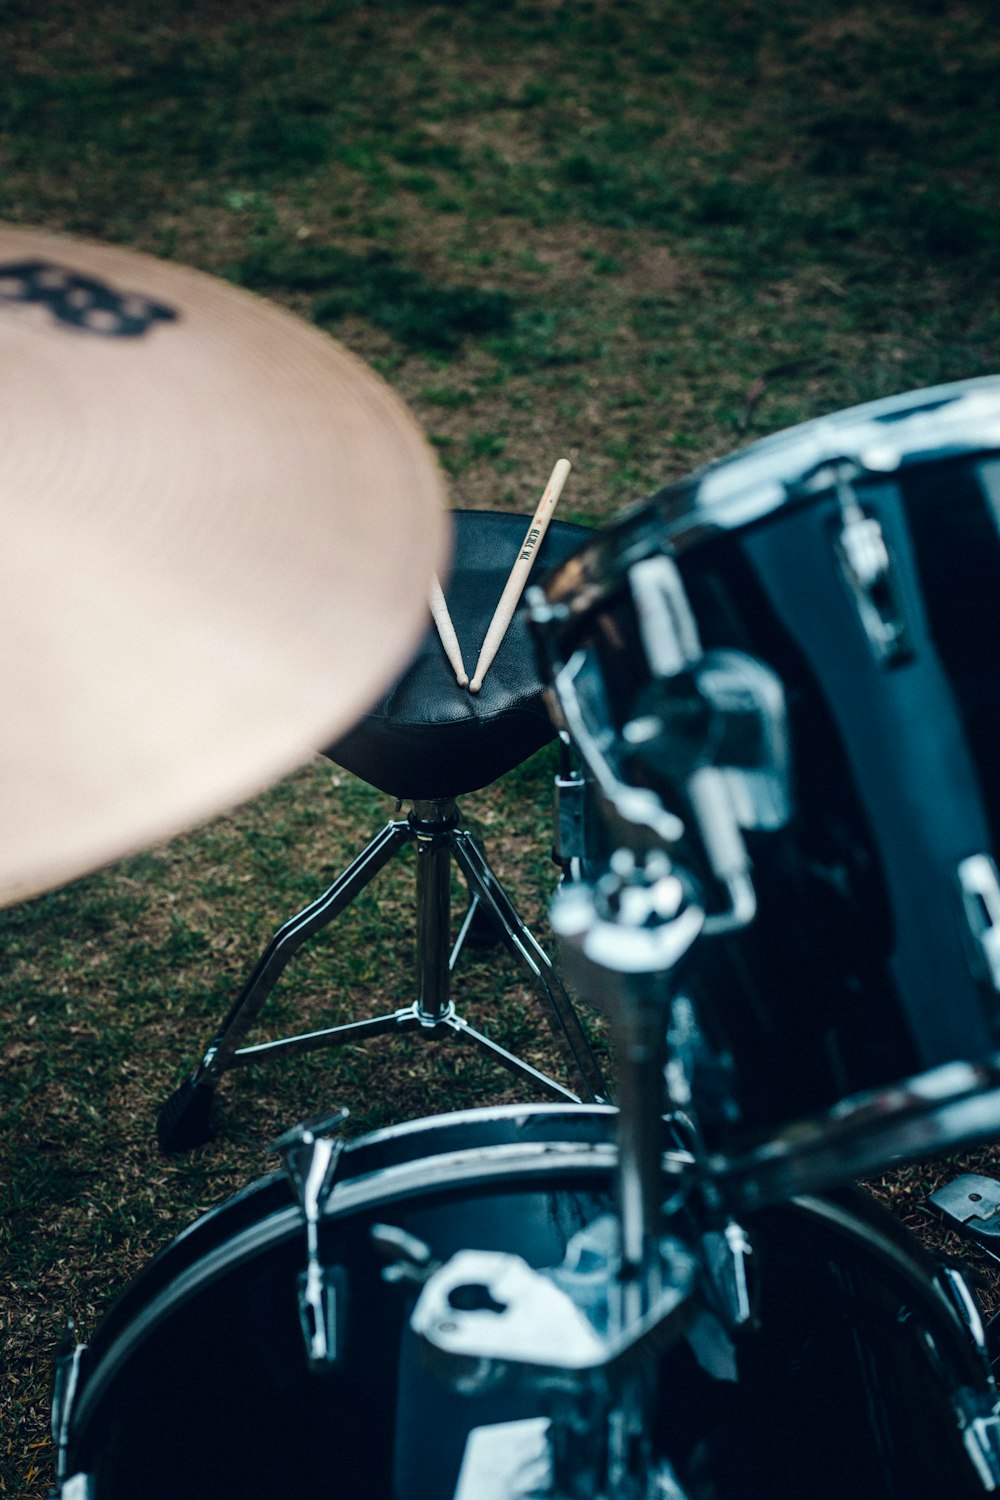 black and white drum set photo – Free Drum Image on Unsplash